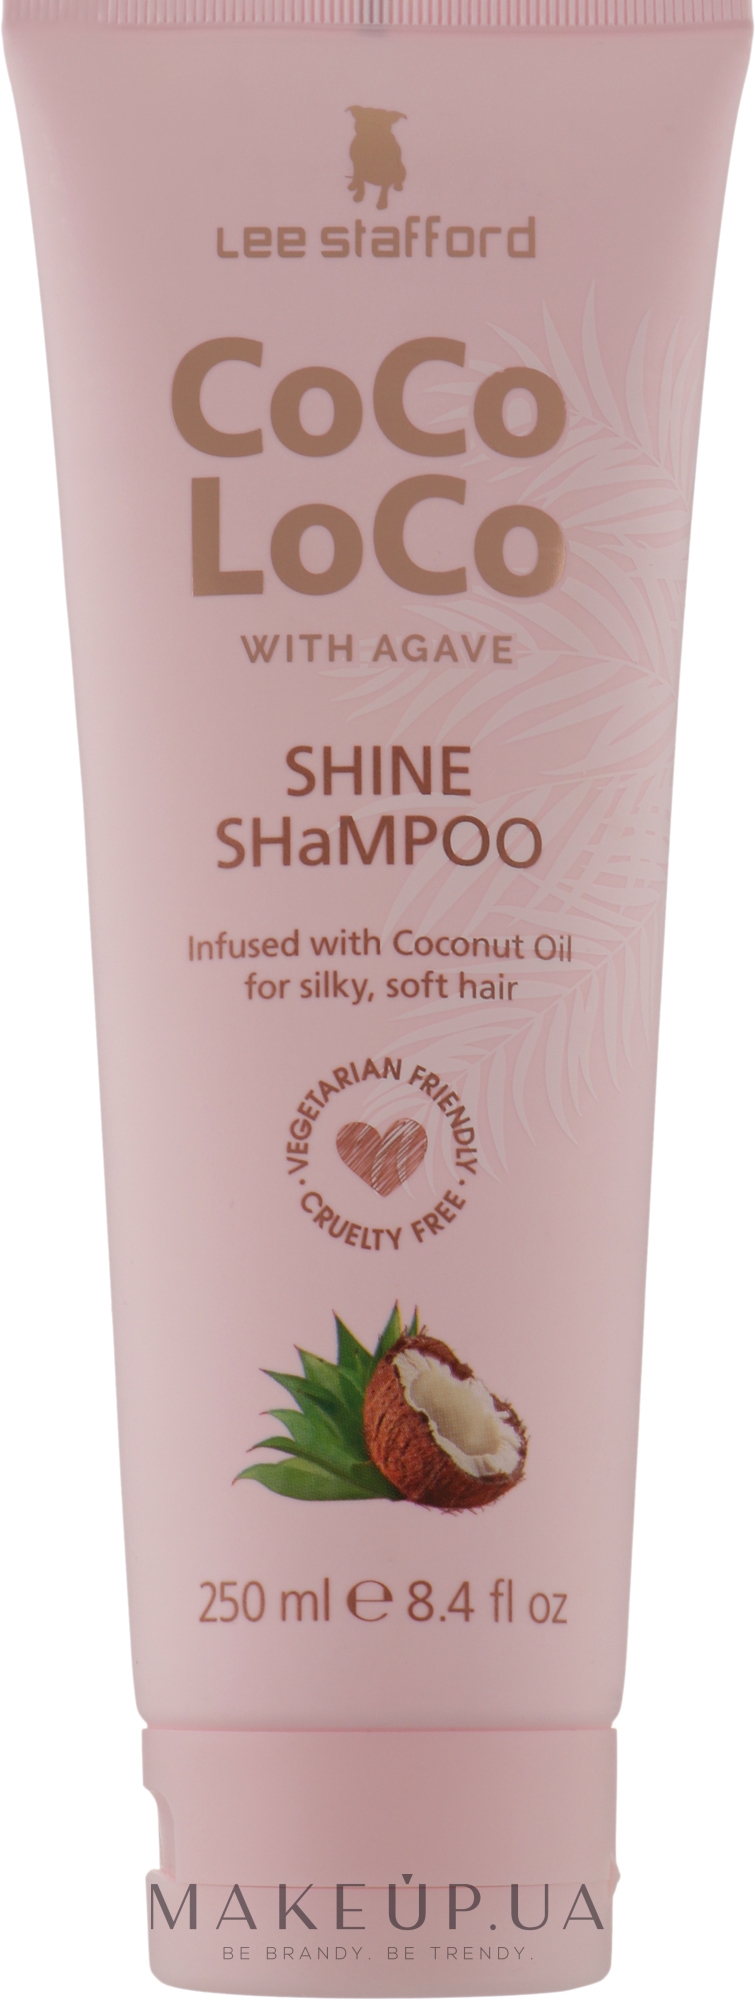 Увлажняющий шампунь для волос - Lee Stafford Сосо Loco Shine Shampoo with Coconut Oil — фото 250ml